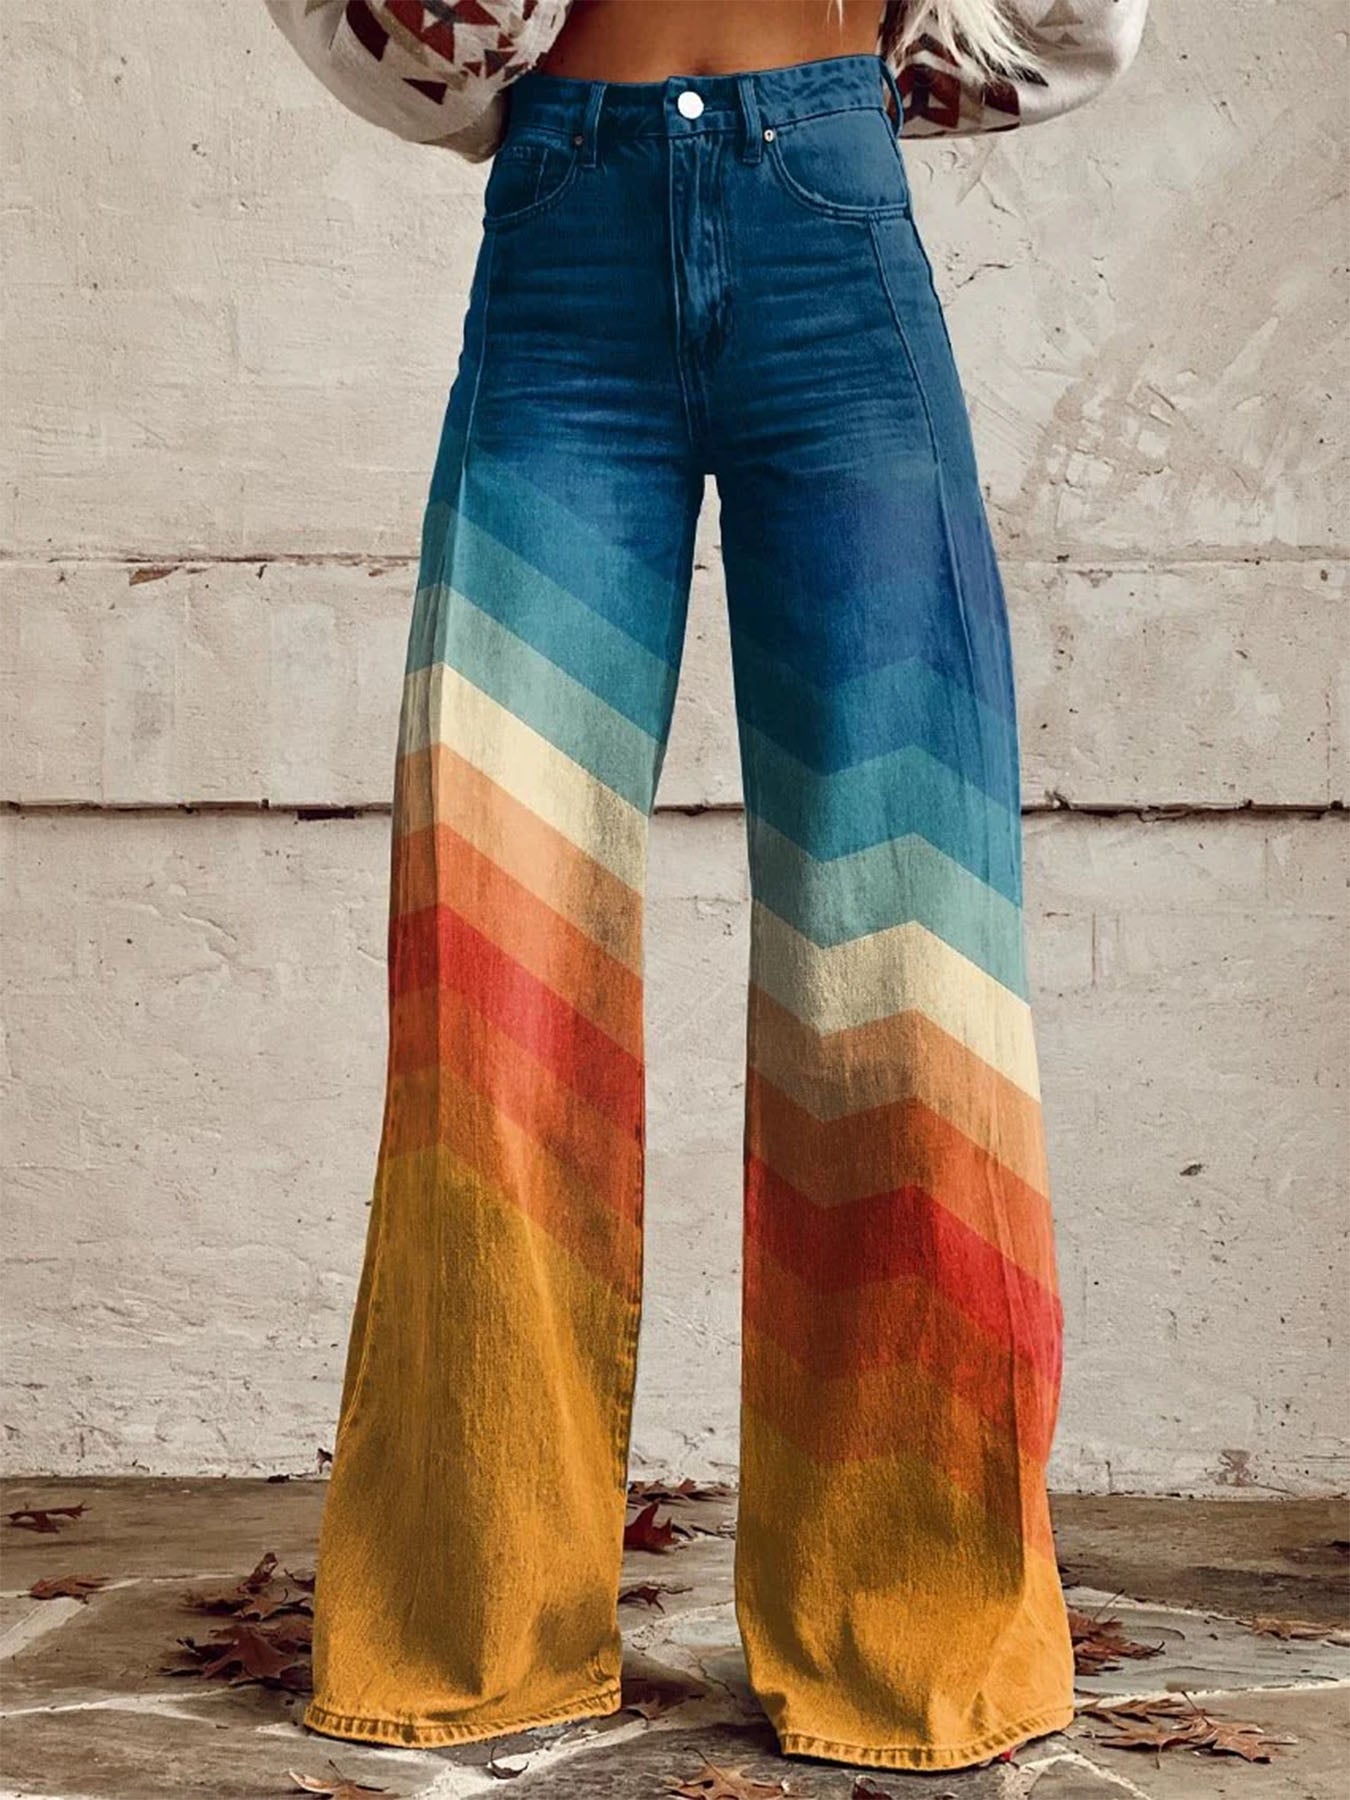 Vorioal Stripes Print Pants